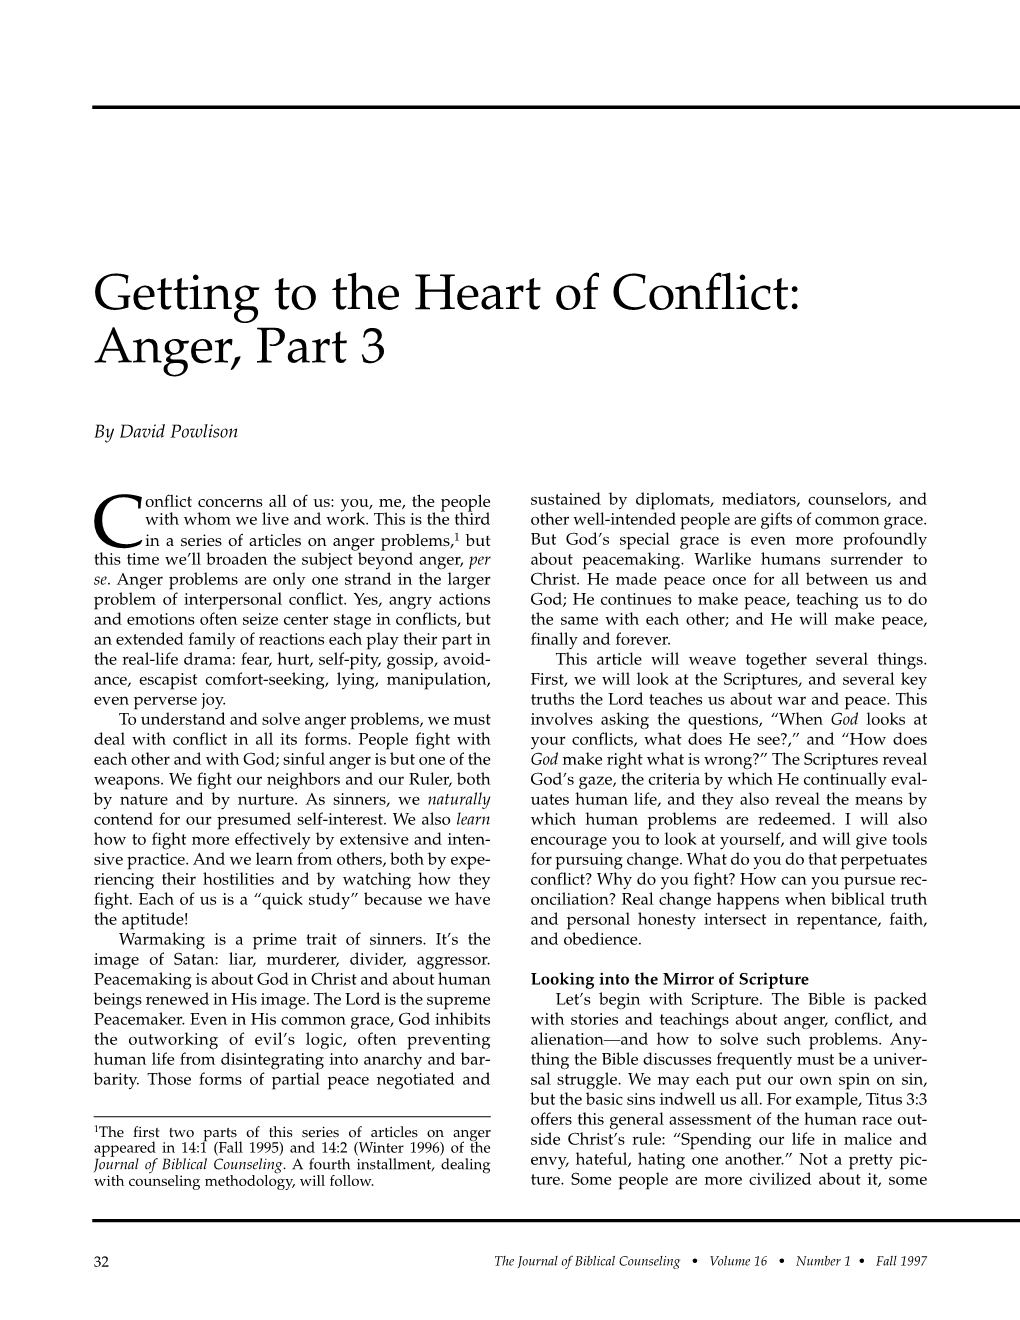 Anger, Part 3